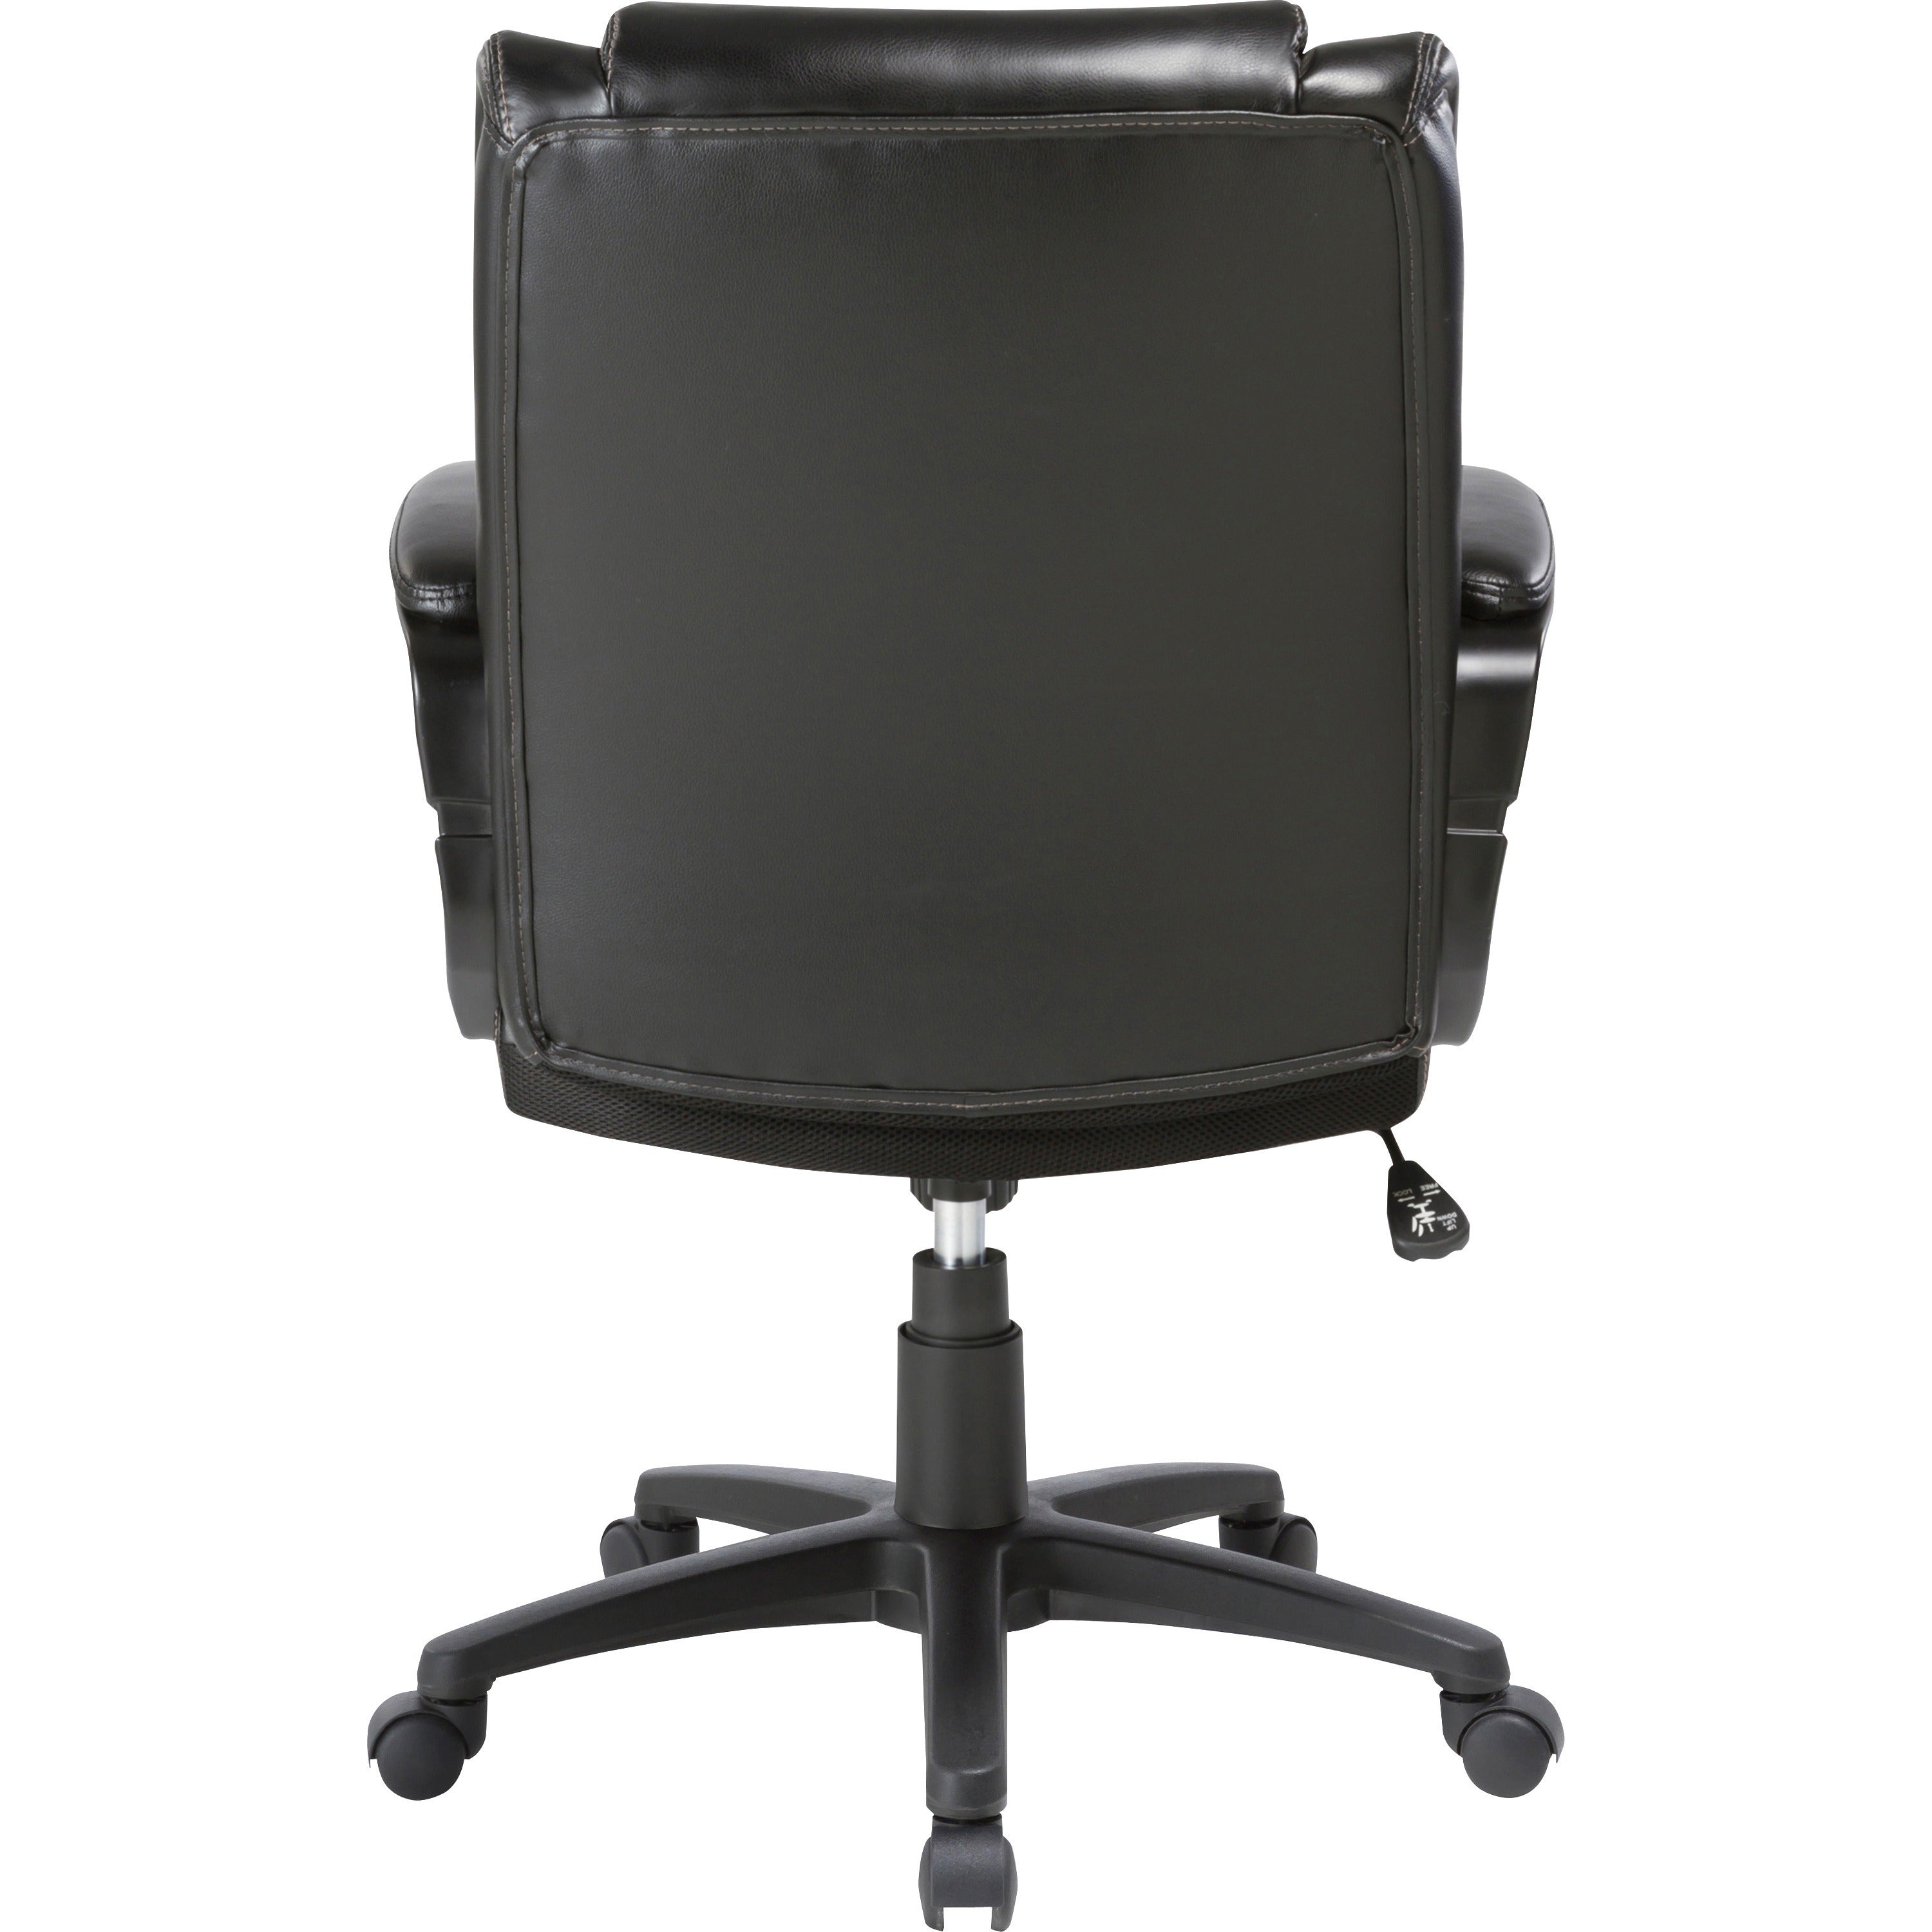 soho-igh-back-office-chair-black-bonded-leather-seat-black-bonded-leather-back-high-back-5-star-base-1-each_llr81801 - 3